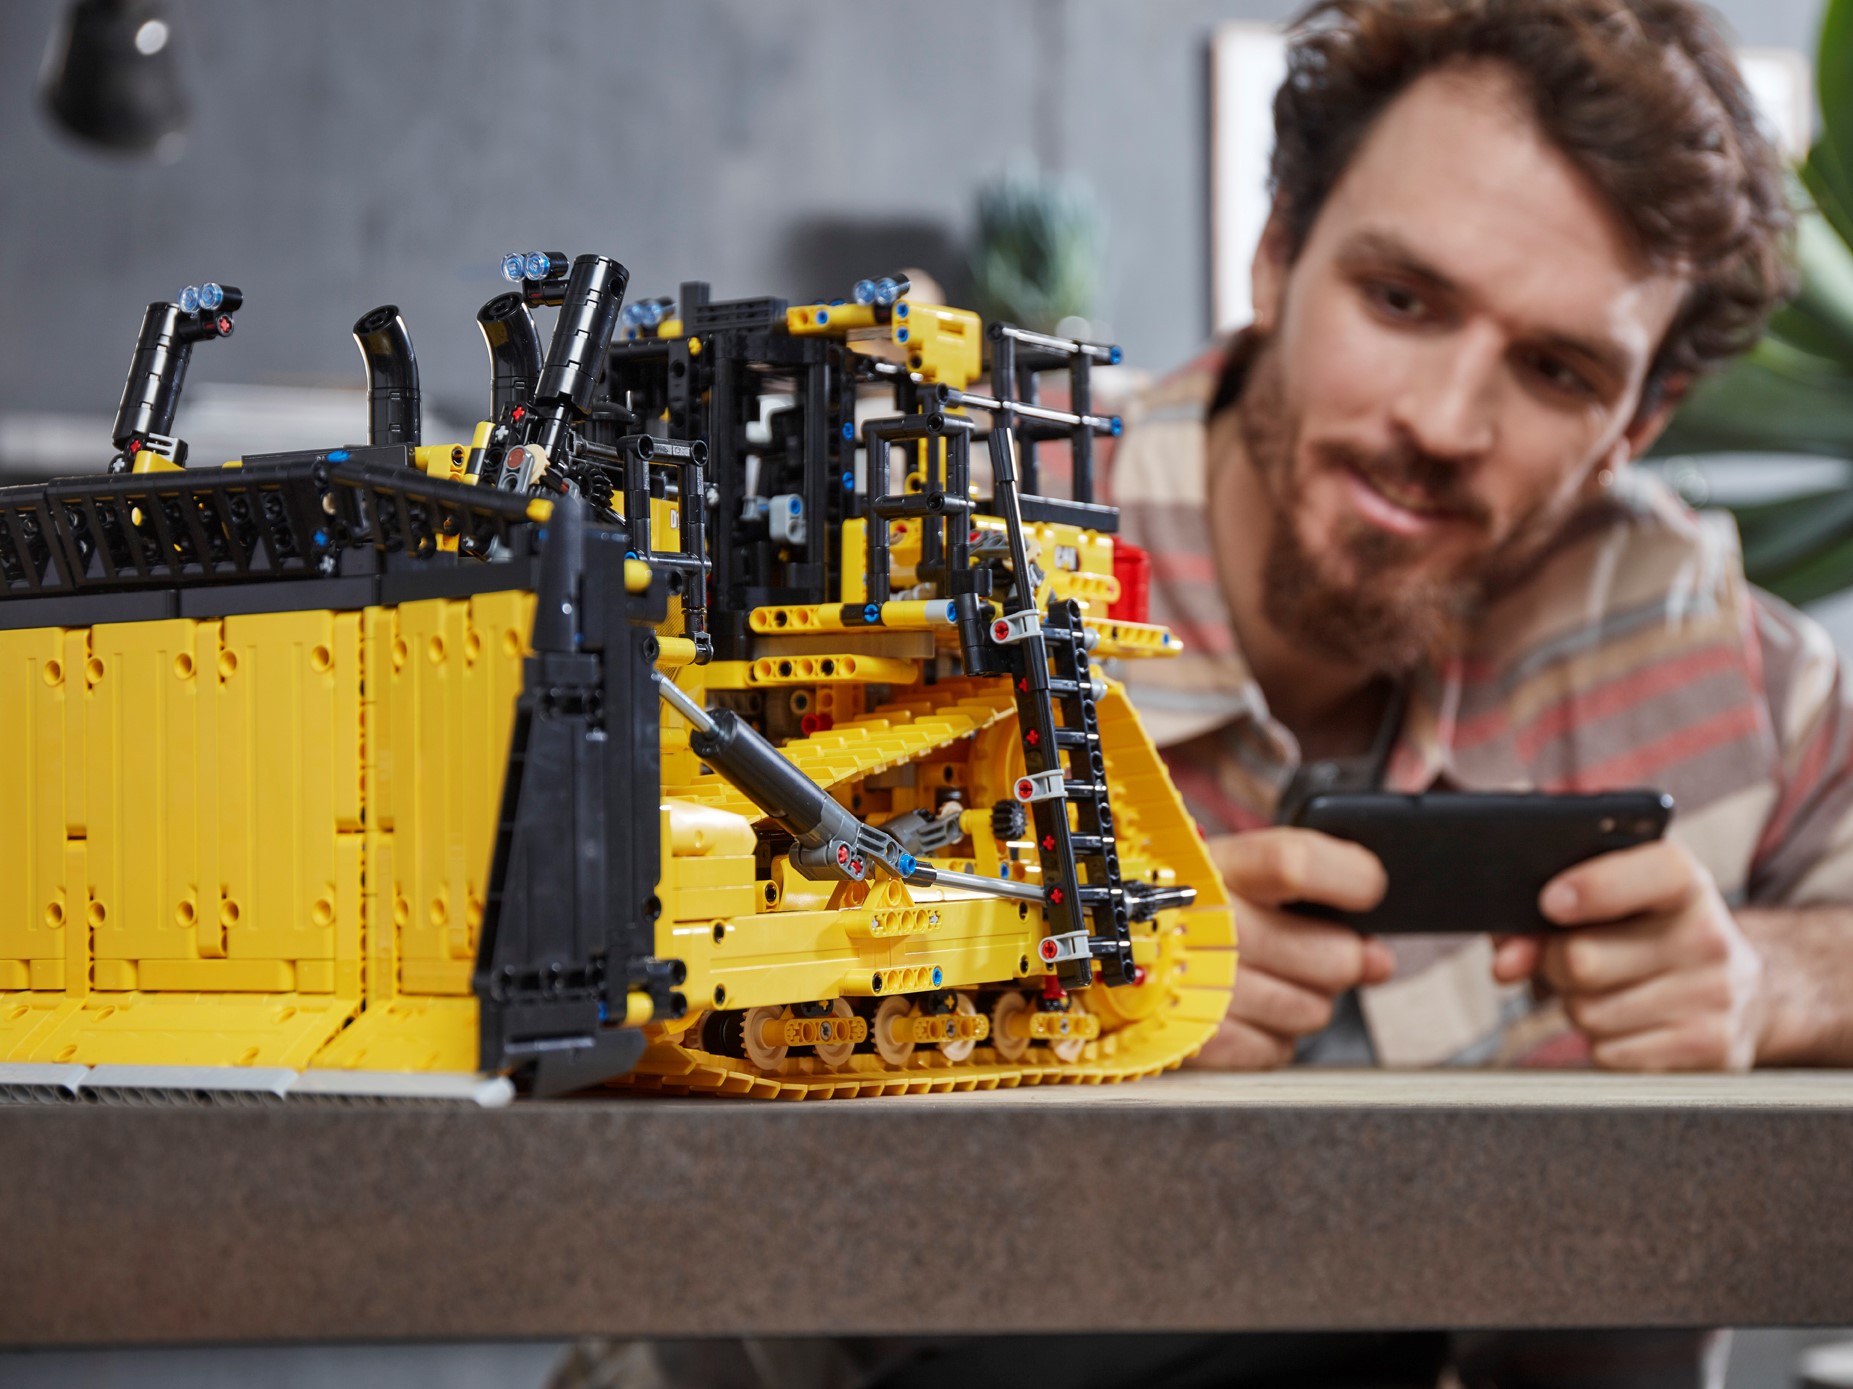 LEGO Technic - App-Controlled Cat D11 Bulldozer (42131) a € 459,90 (oggi)